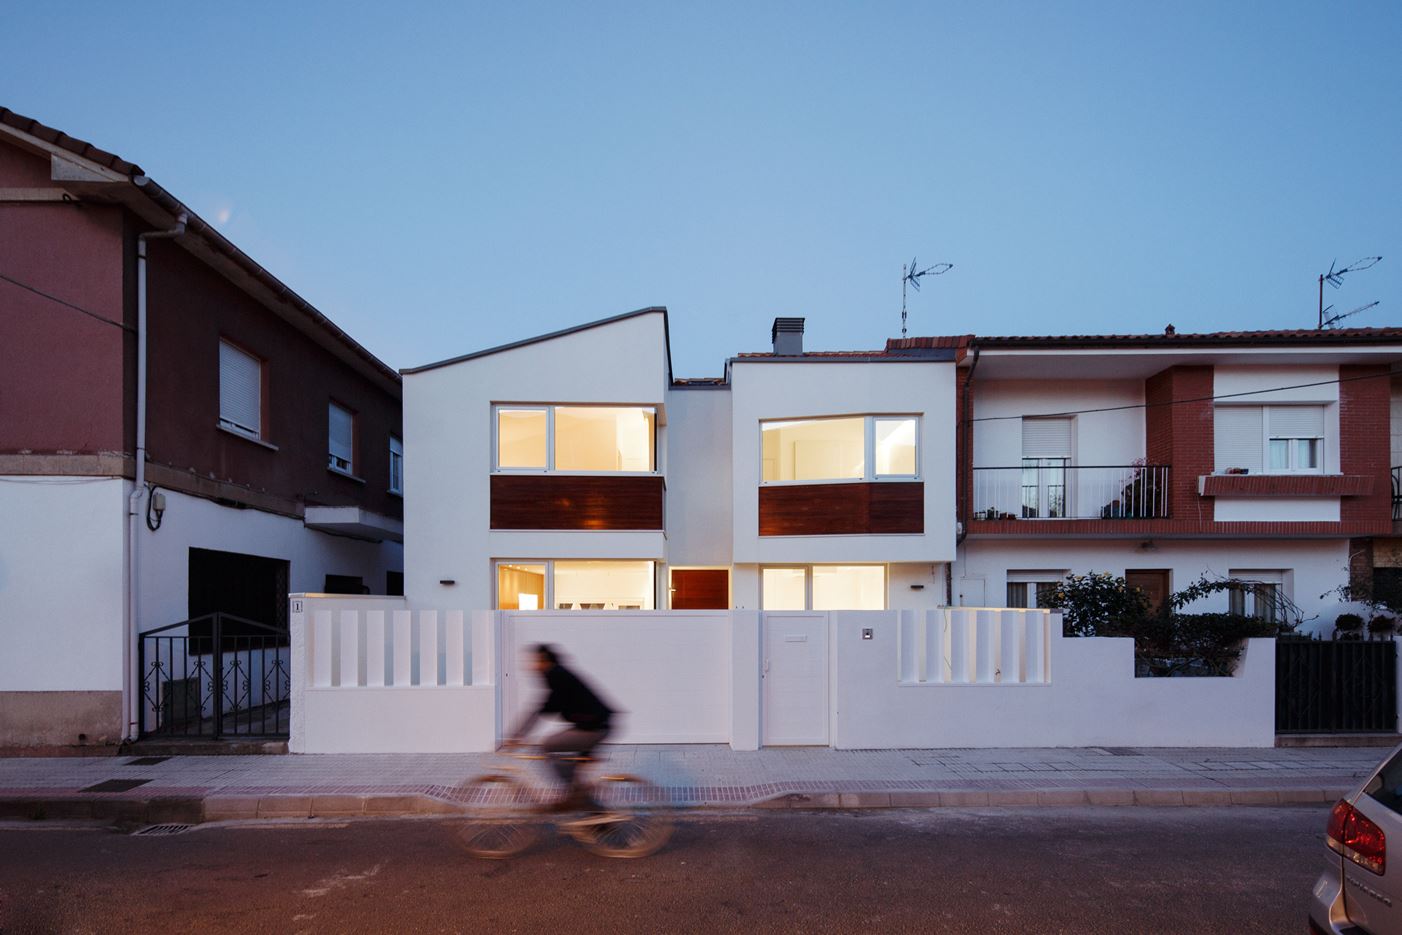 AJ House in Salinas, Spain by O+C Arquitectos